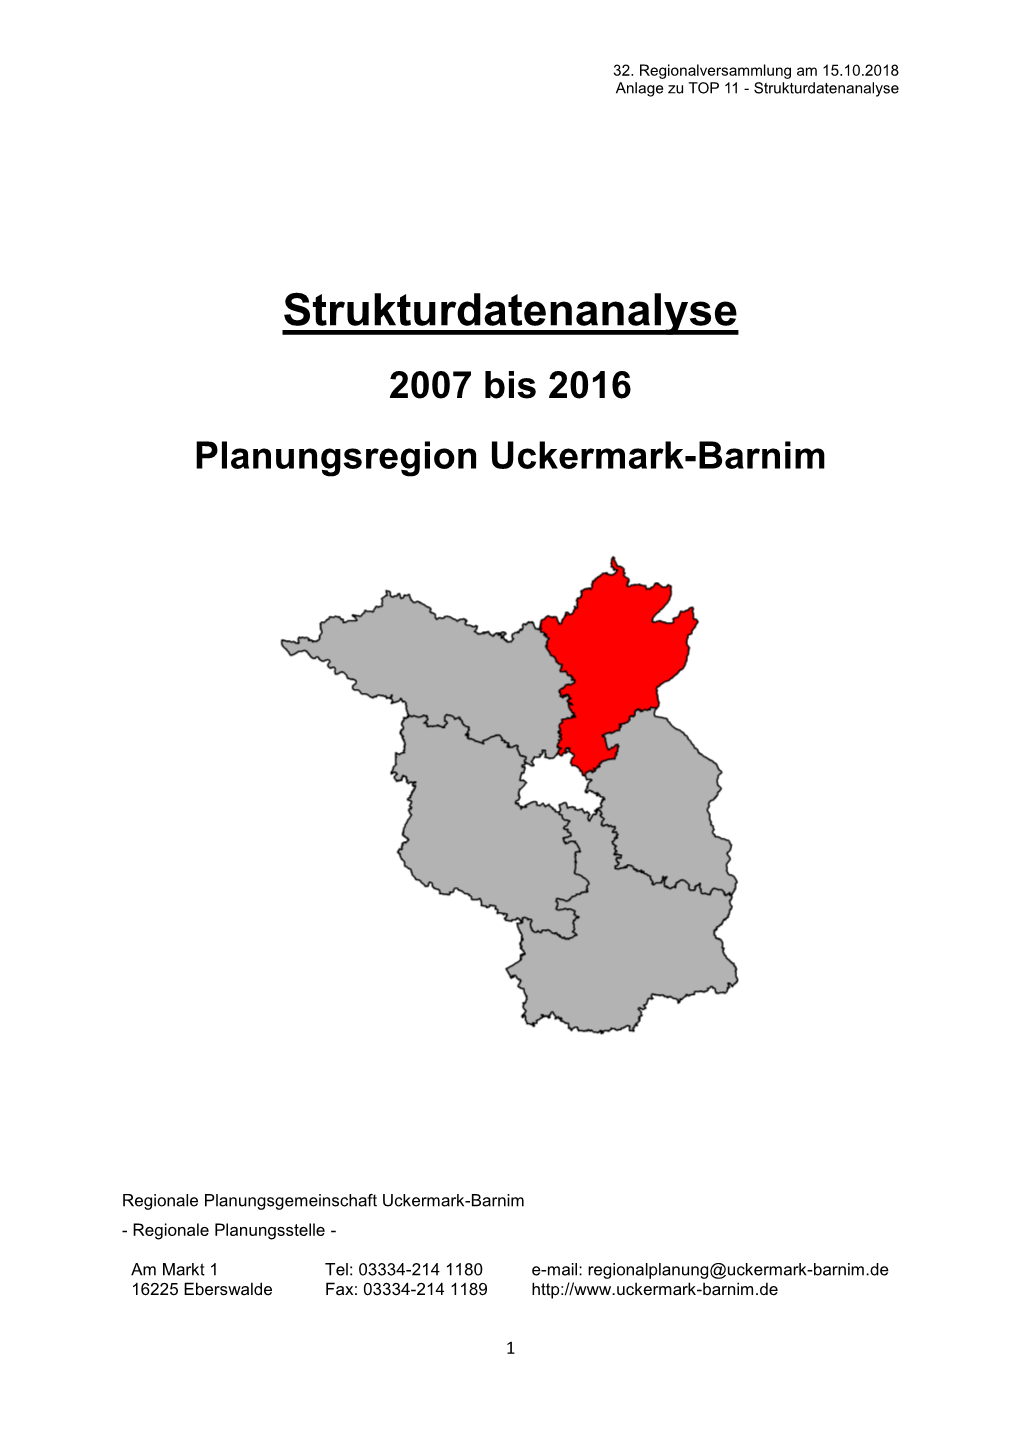 Strukturdatenanalyse 2007 Bis 2016 Planungsregion Uckermark-Barnim